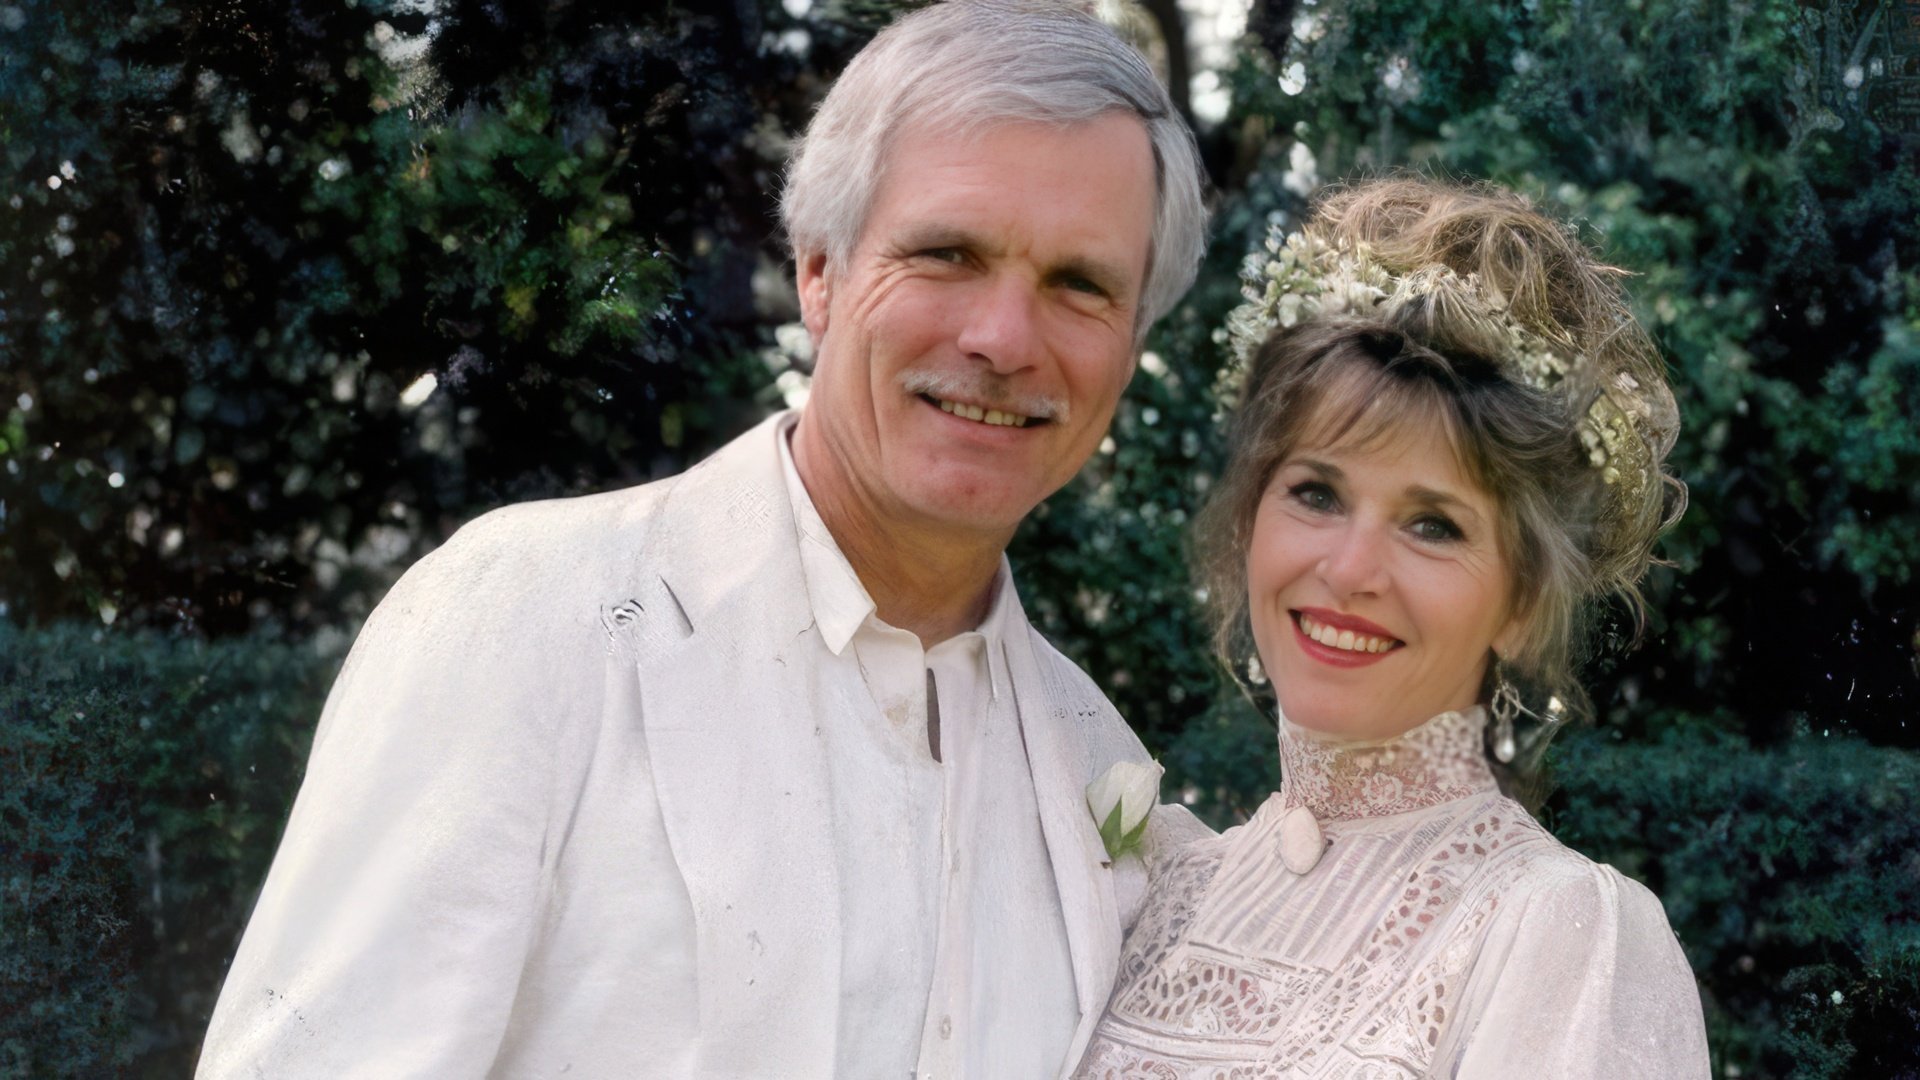 Jane Fonda and her last husband Ted Turner